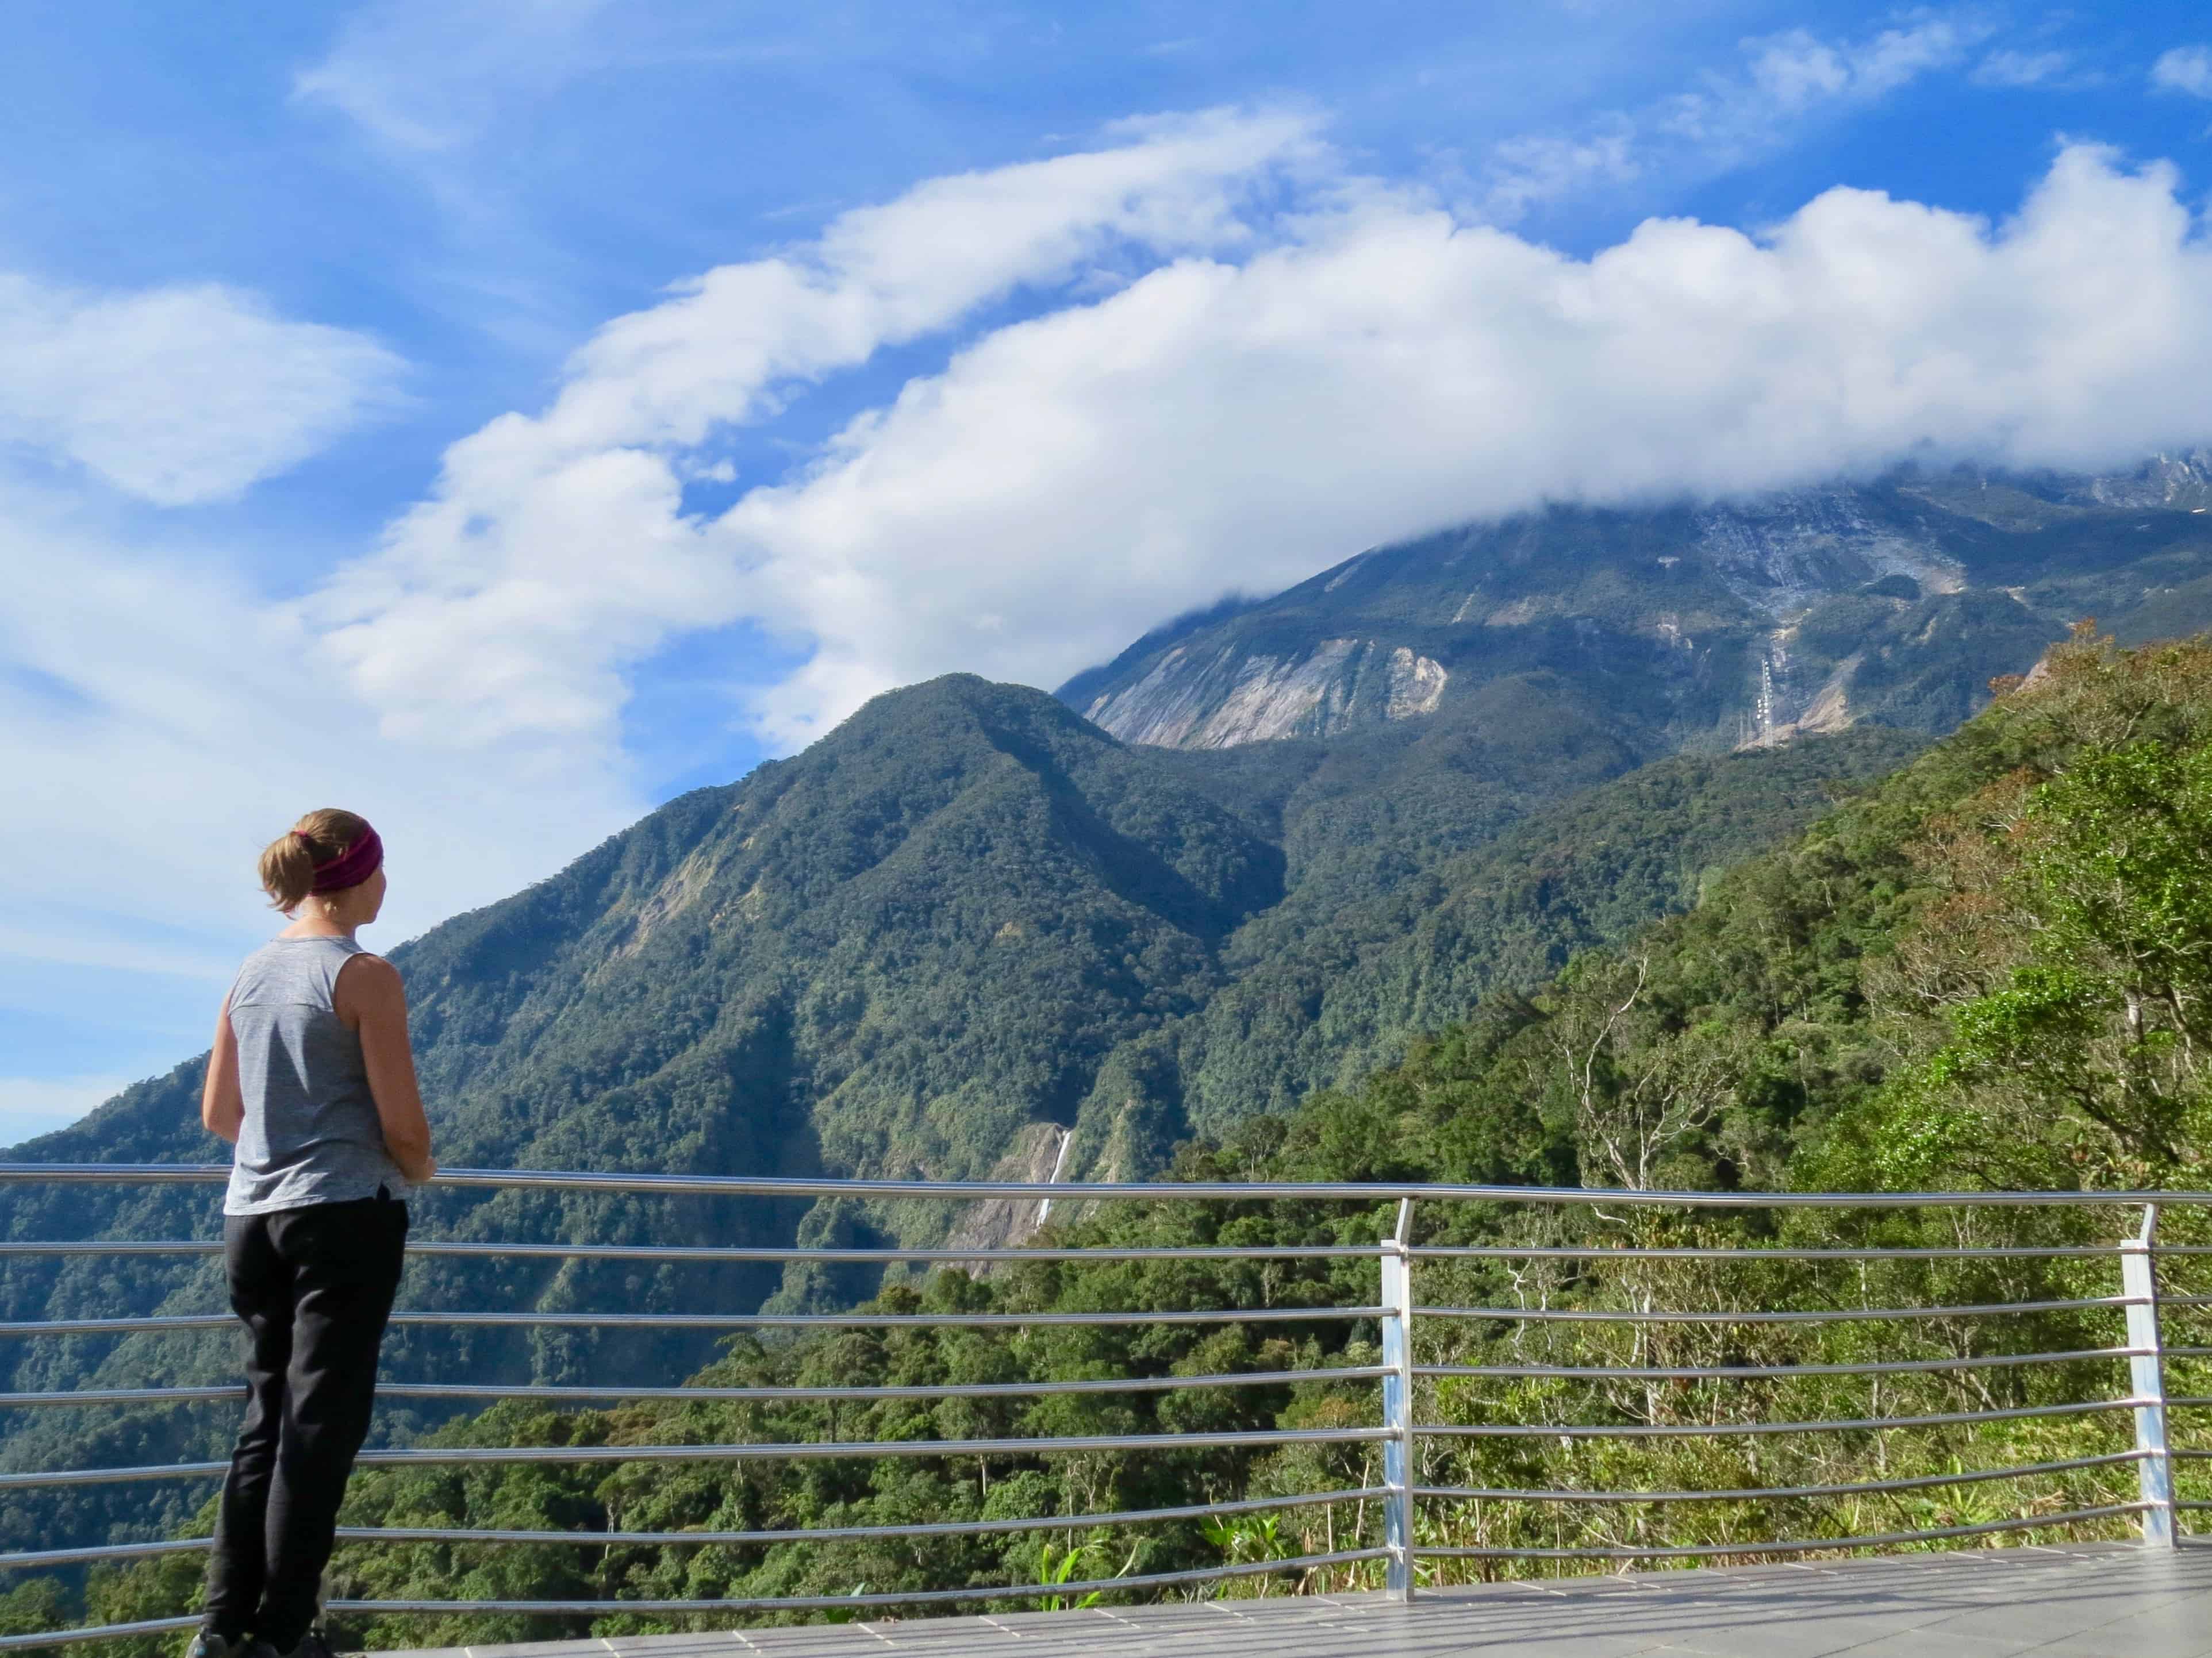 Joannda gazing out toward Mount Kinabalu